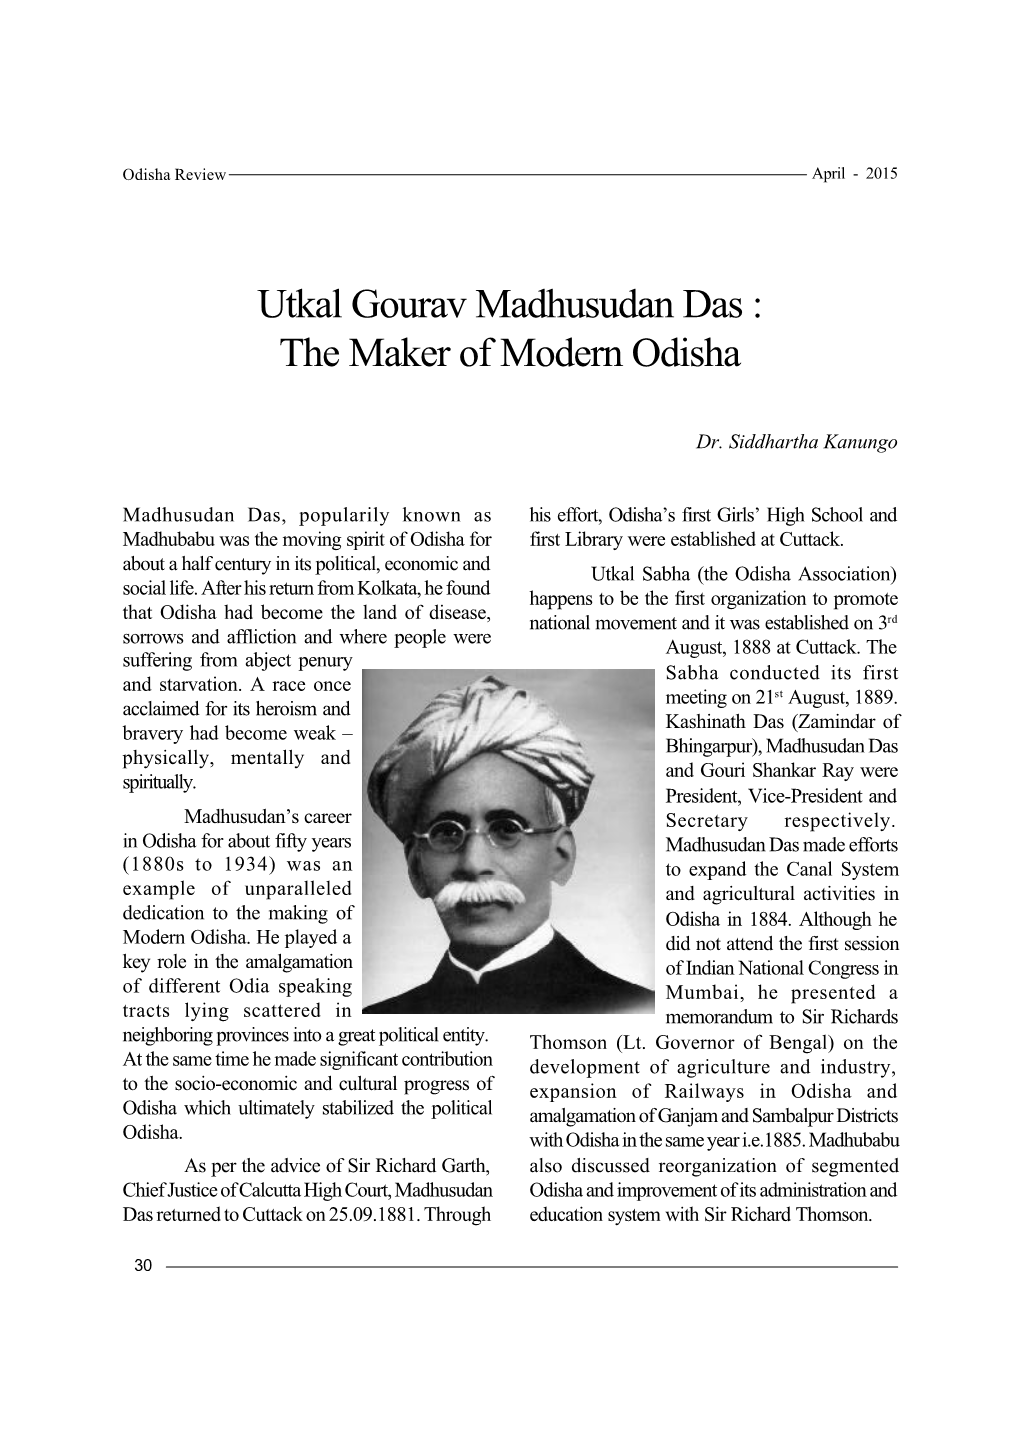 Utkal Gourav Madhusudan Das : the Maker of Modern Odisha